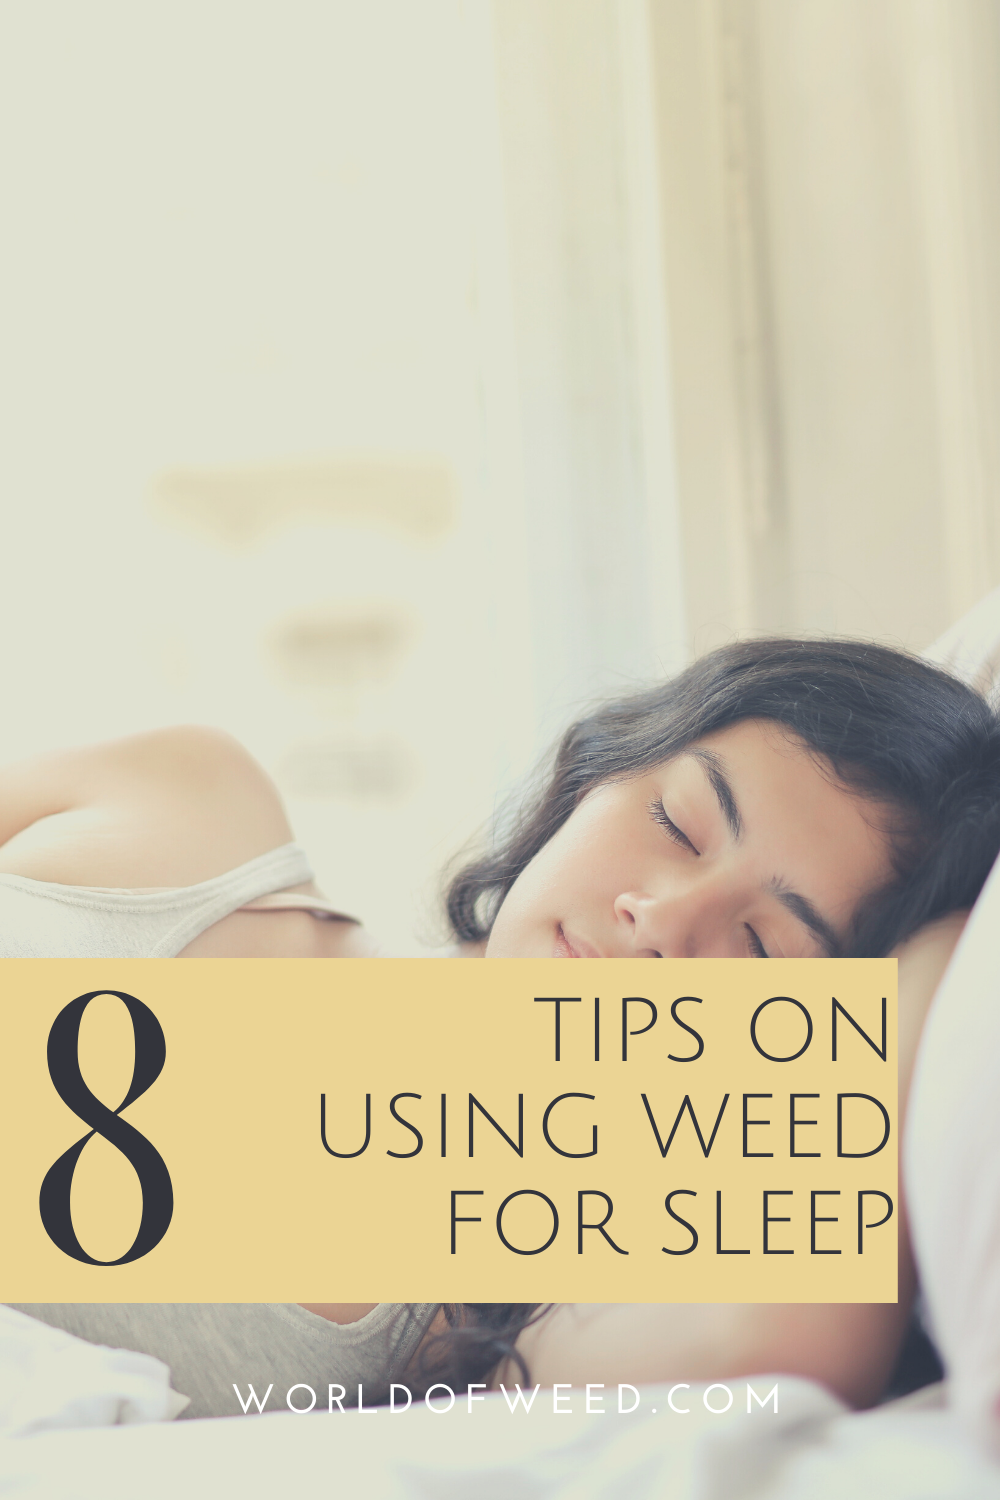 8 Tips on Using Weed for Sleep